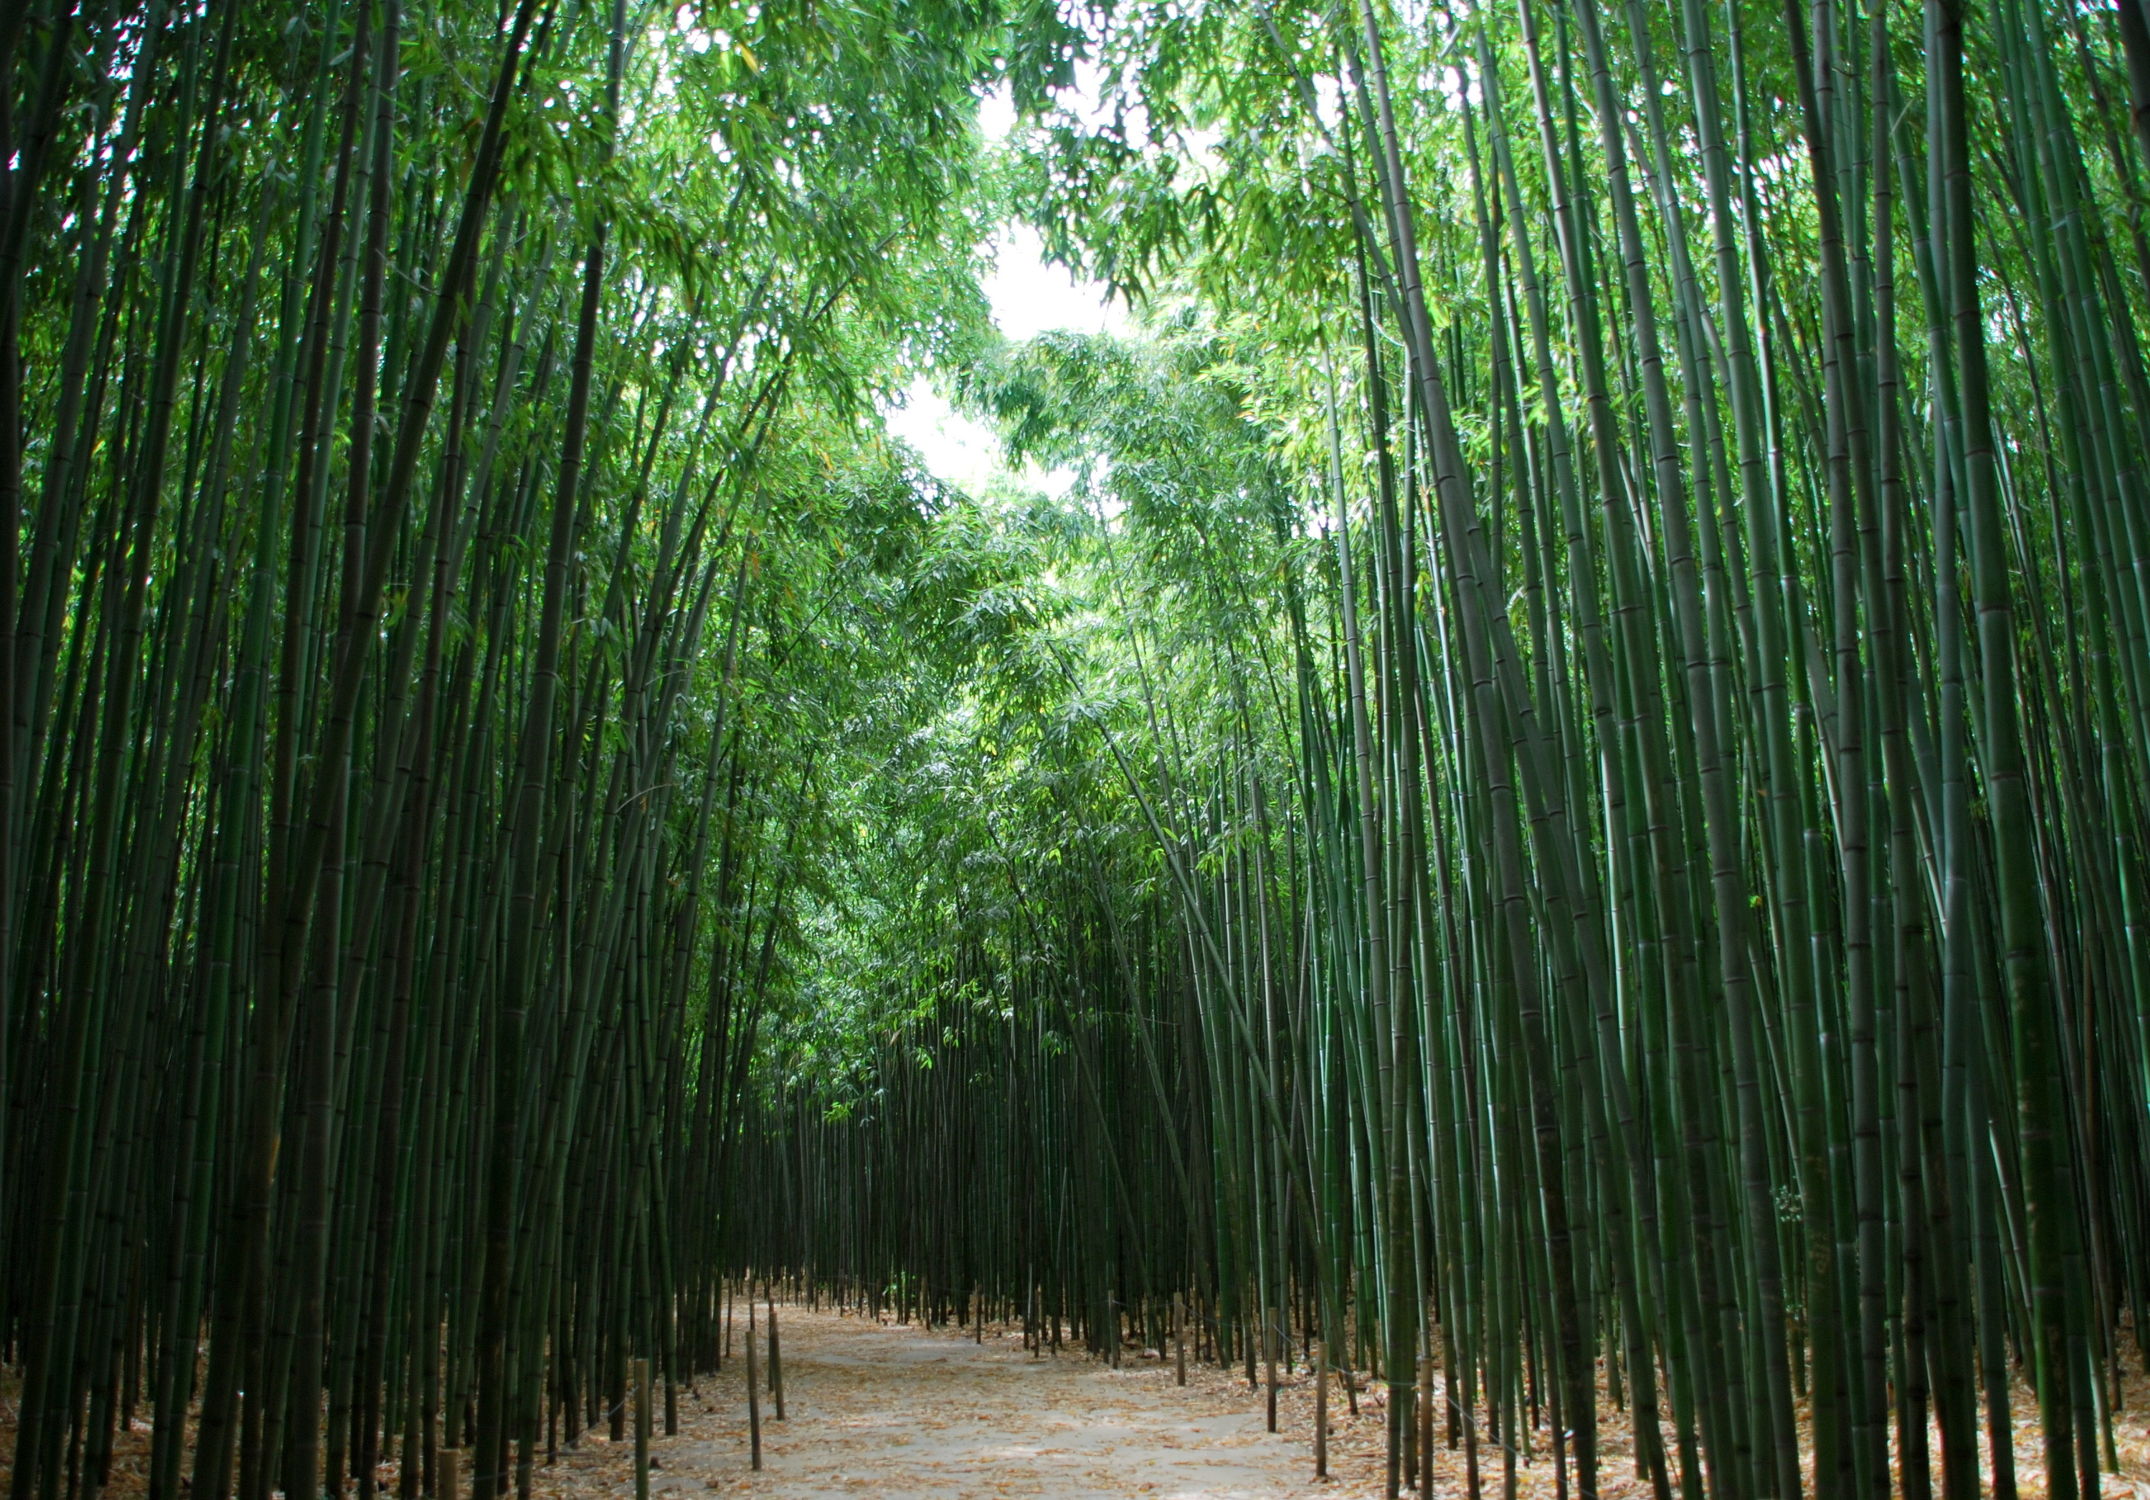 Bild mit Grün, Bambus, bamboo, Tapete, Tapeten Muster, Harmonie in Grün, wandtapete, fototapete, bambuswald, tunnel